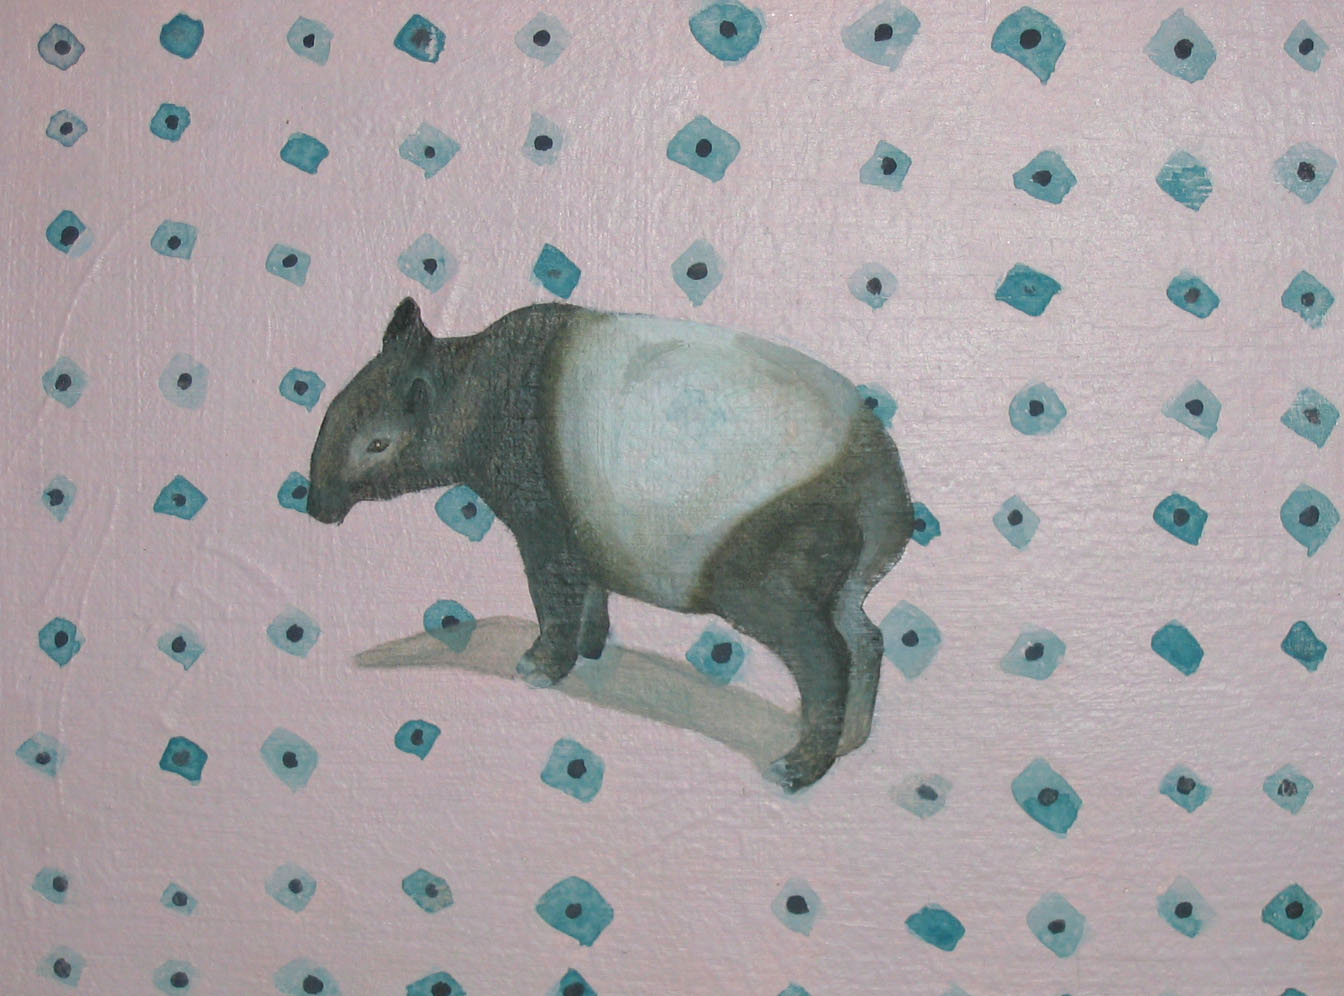 http://3.bp.blogspot.com/_RzAt0NvaY2k/S9lemvrJ0fI/AAAAAAAAAJY/obzPJzMvqo8/s1600/tapir_pattern.jpg